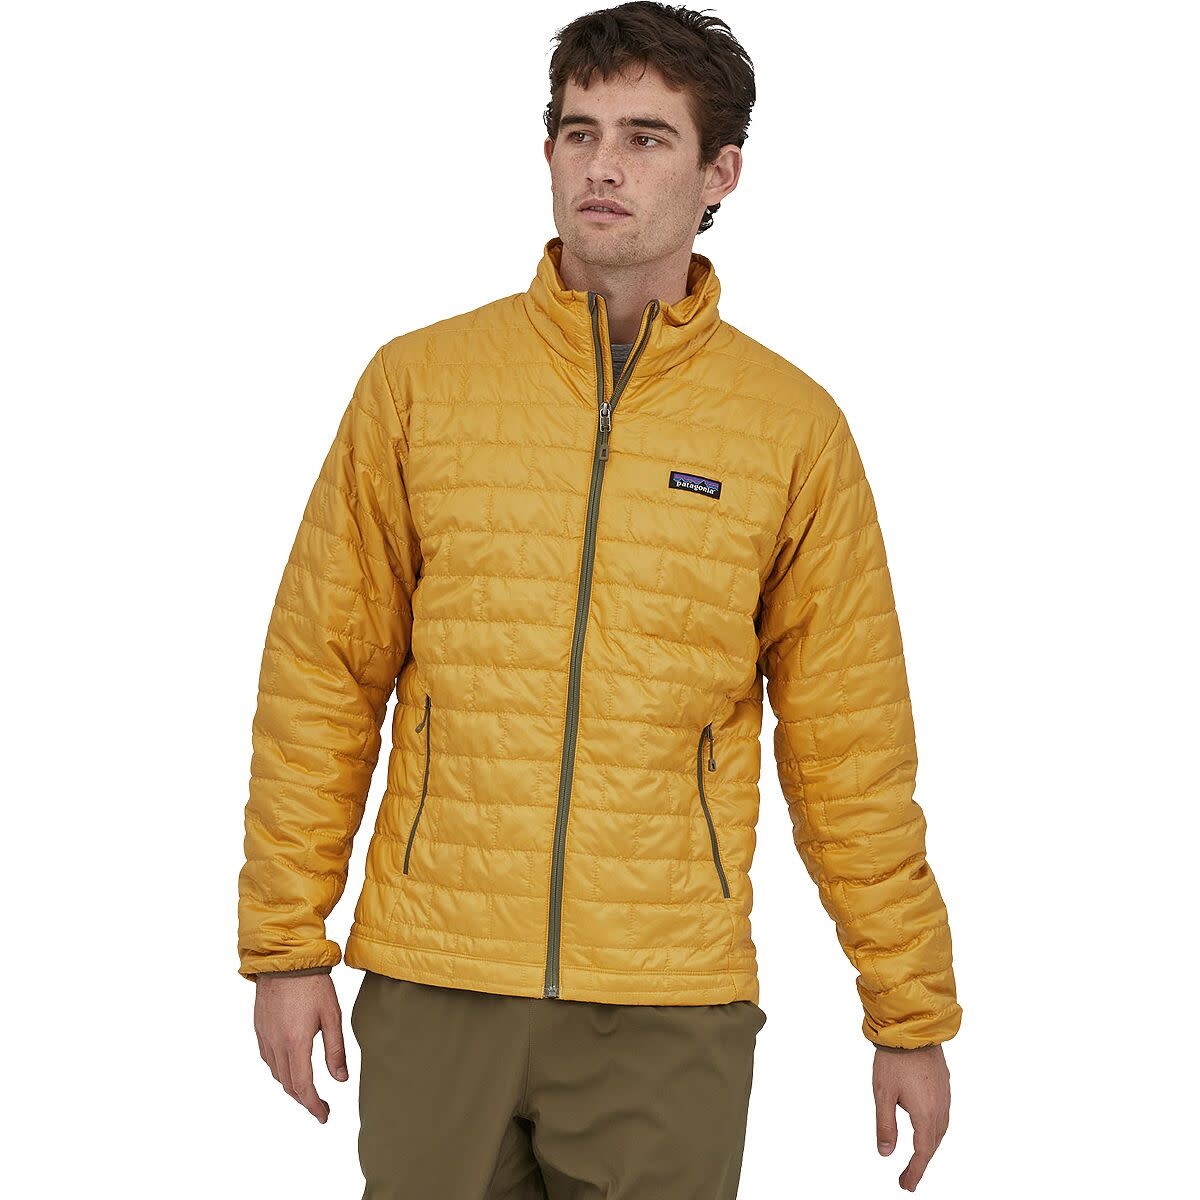 Patagonia Nano Puff Insulated Jacket - Men's - Clothing